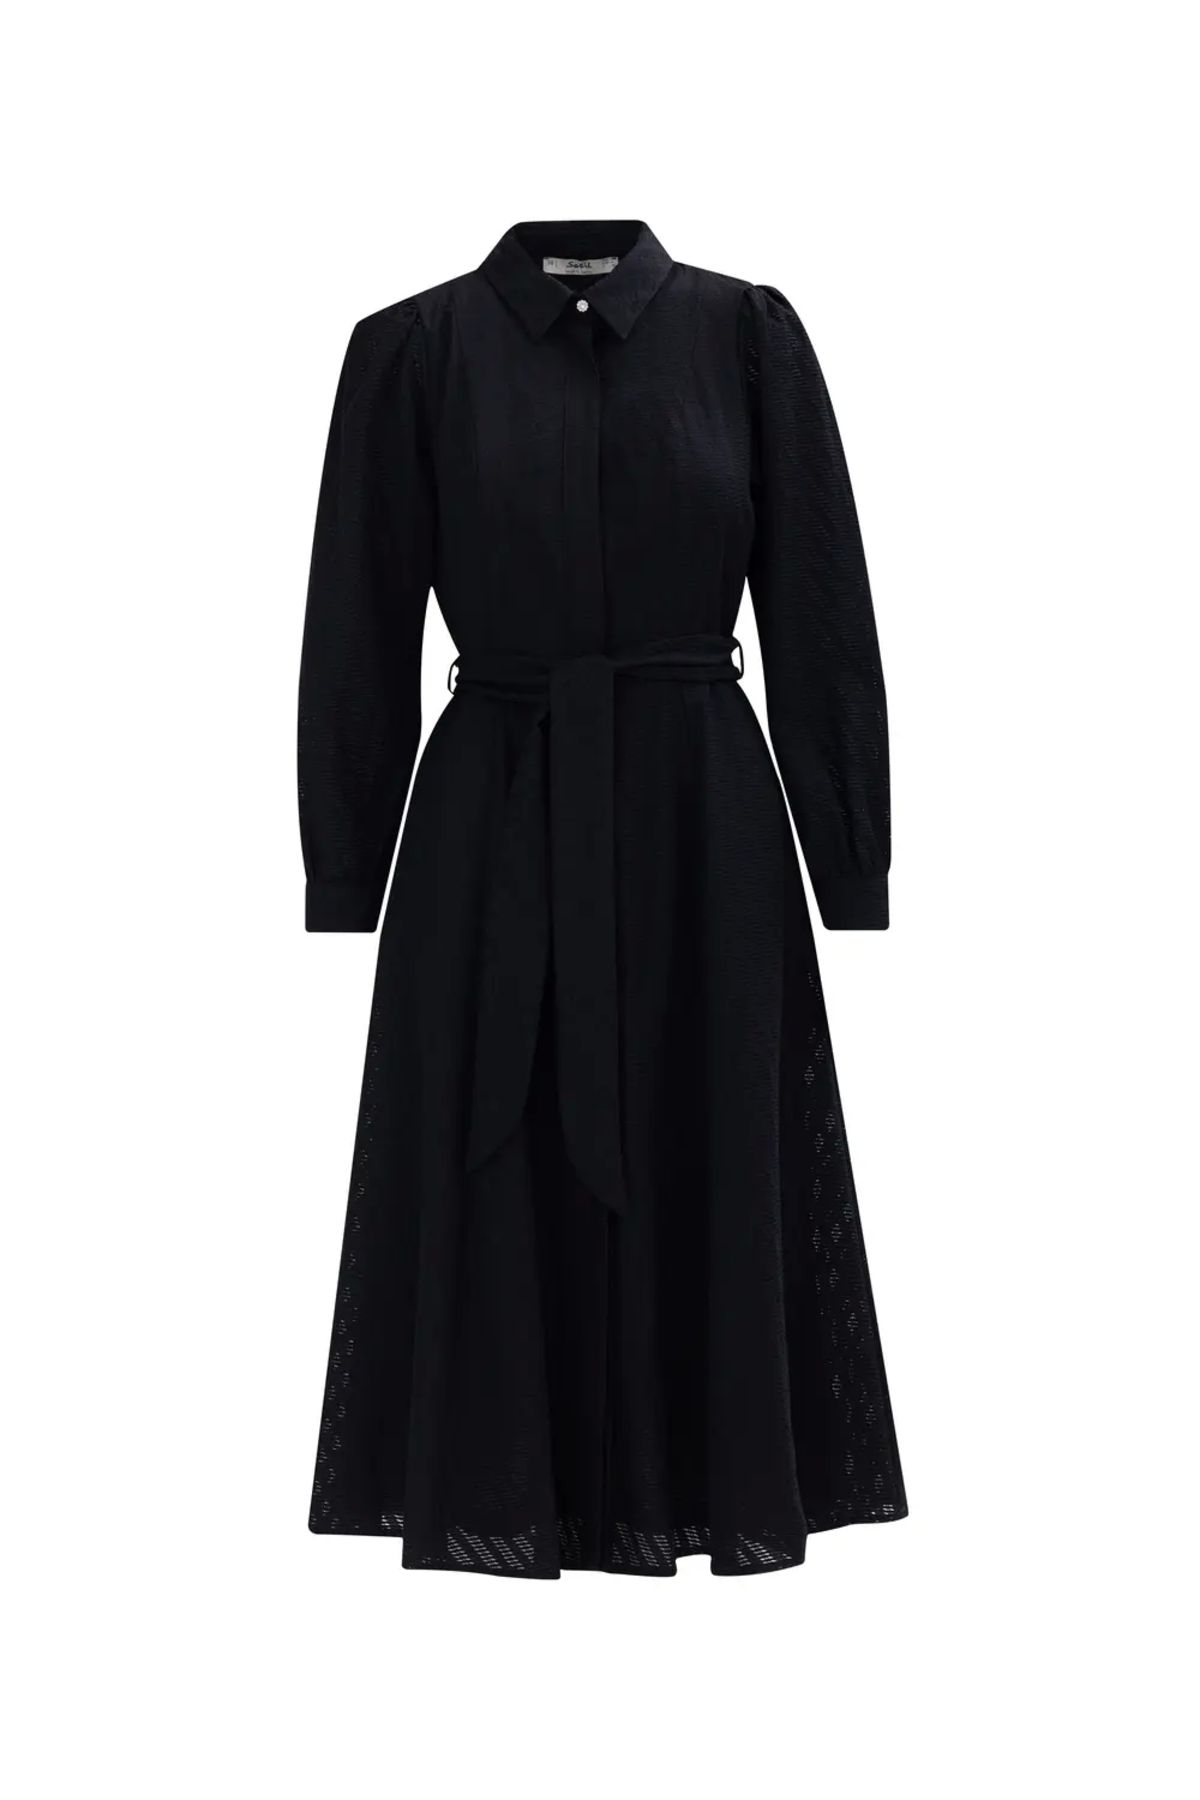 SEÇİL Seçil Elbise 4001028 - Siyah